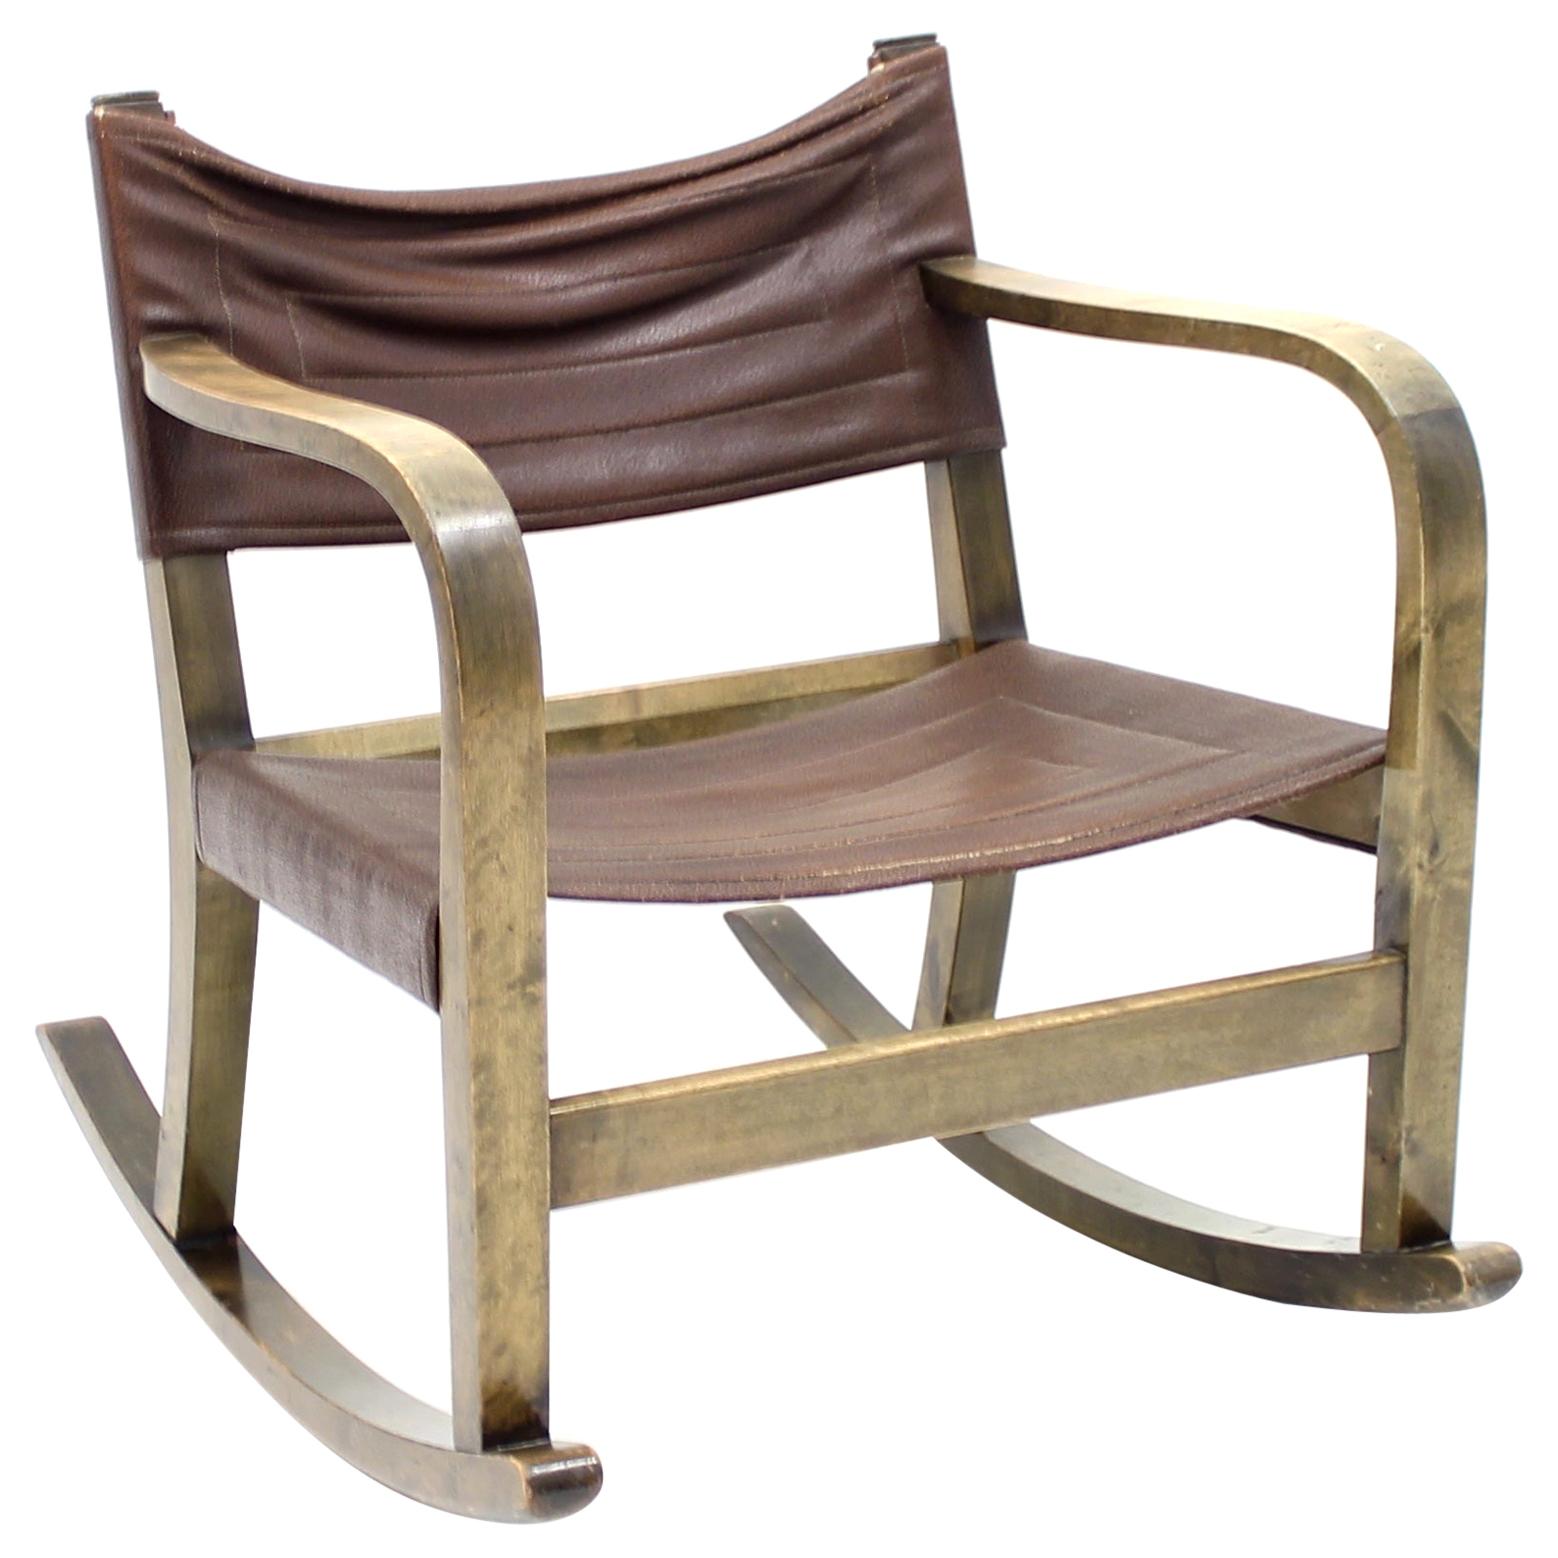 Eskil Sundahl Art Deco Rocking Chair for Bodafors, 1930s